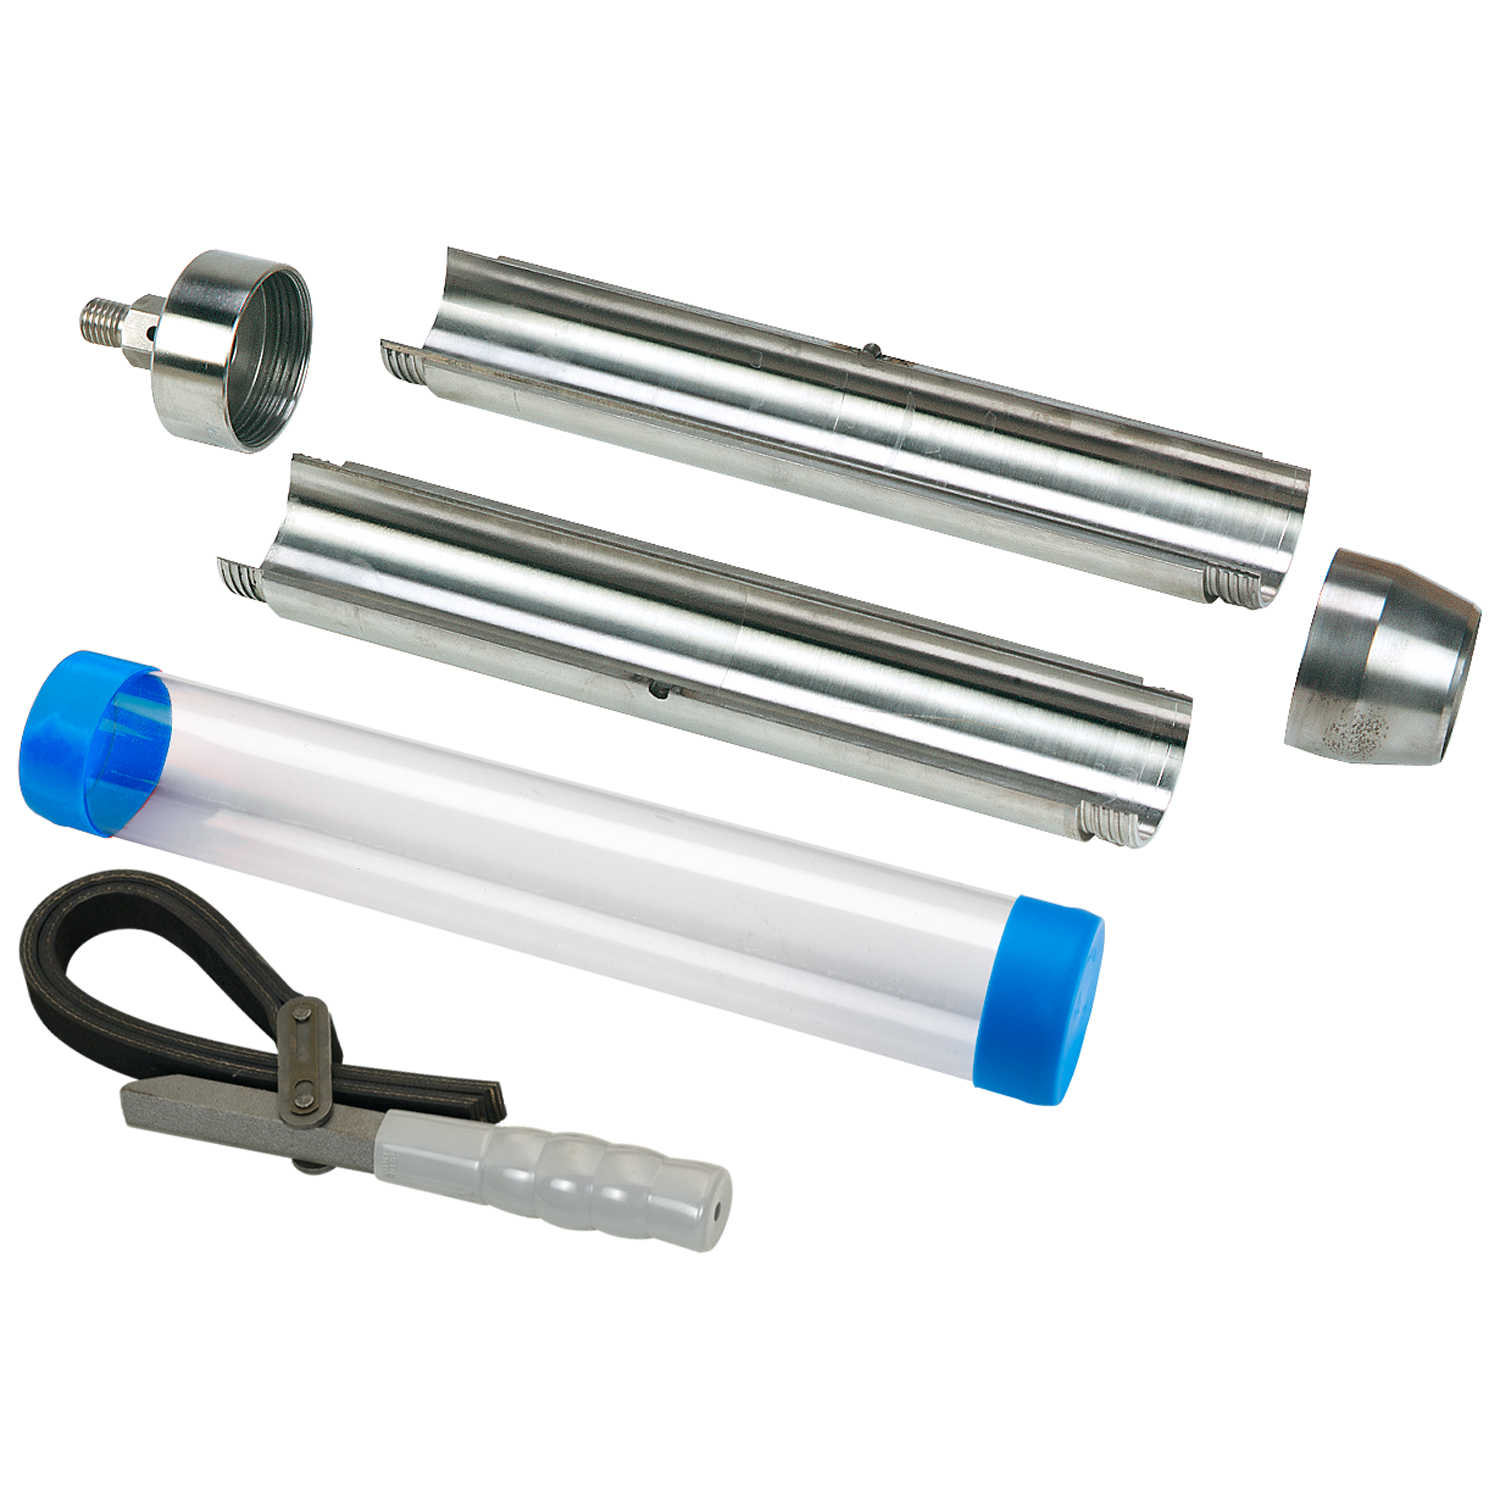 Core Sampler. Split Spoon Sampler. Mostap Soil Sampler. Plastic Sample Kits. Sampling tools